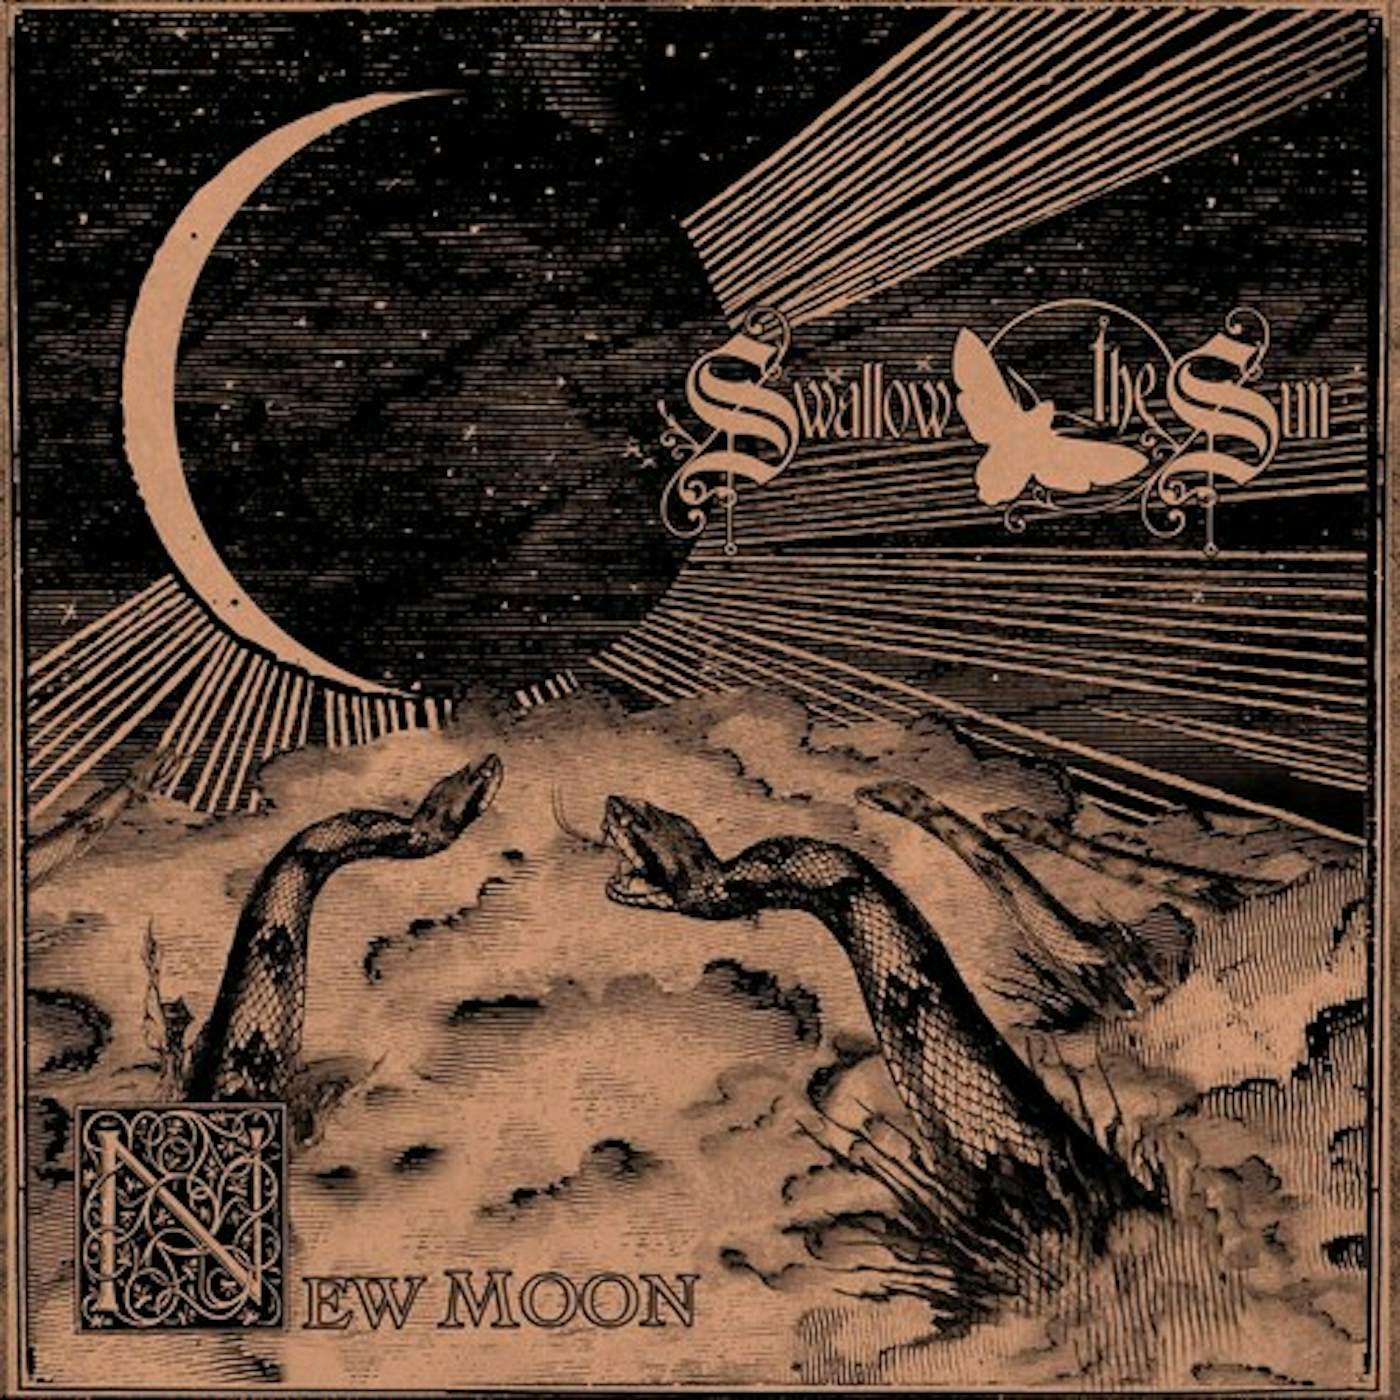 Swallow The Sun New Moon Vinyl Record